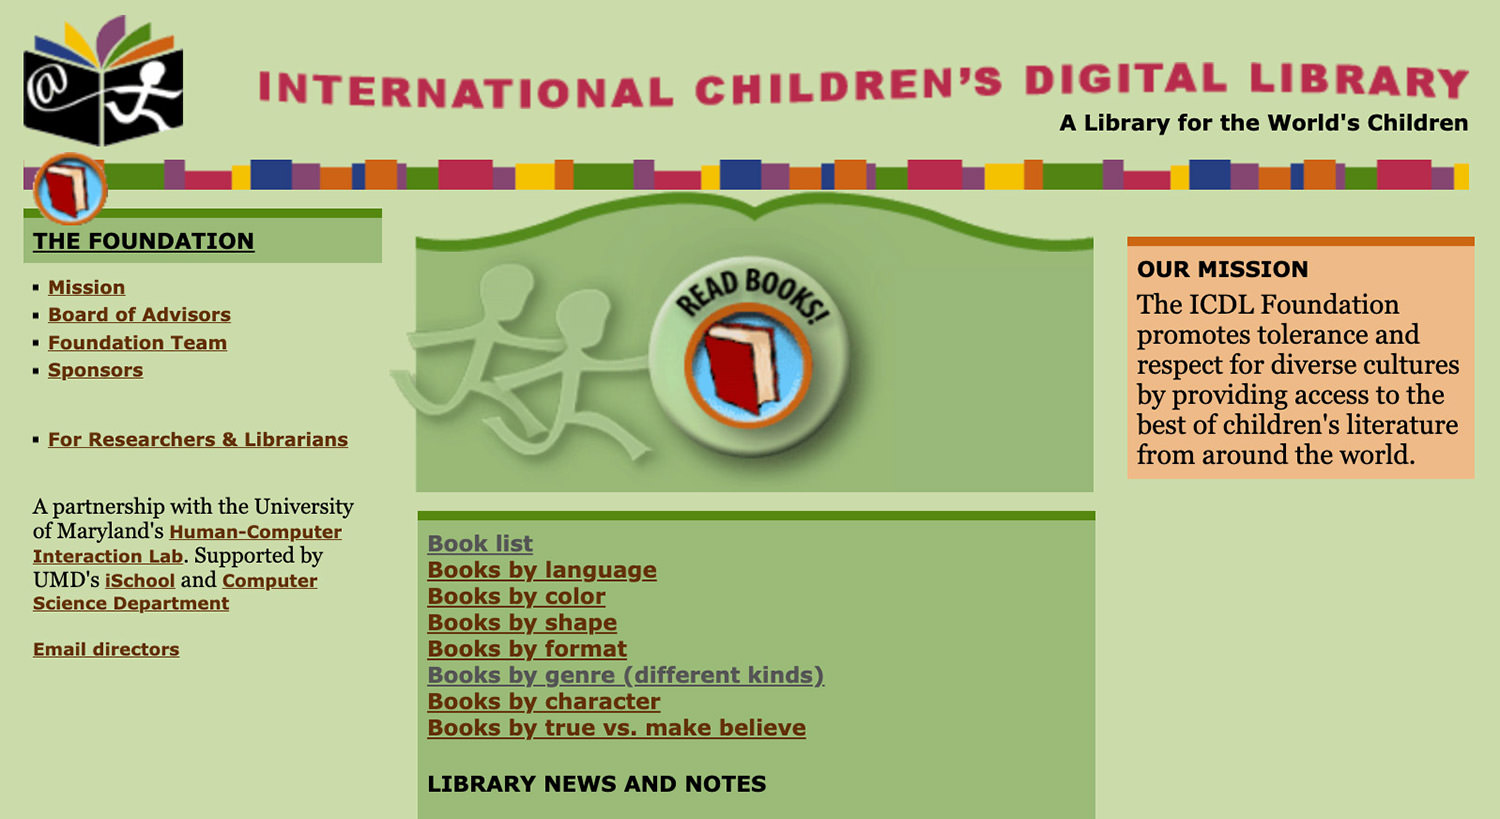 Image of International Children's Digital Library website